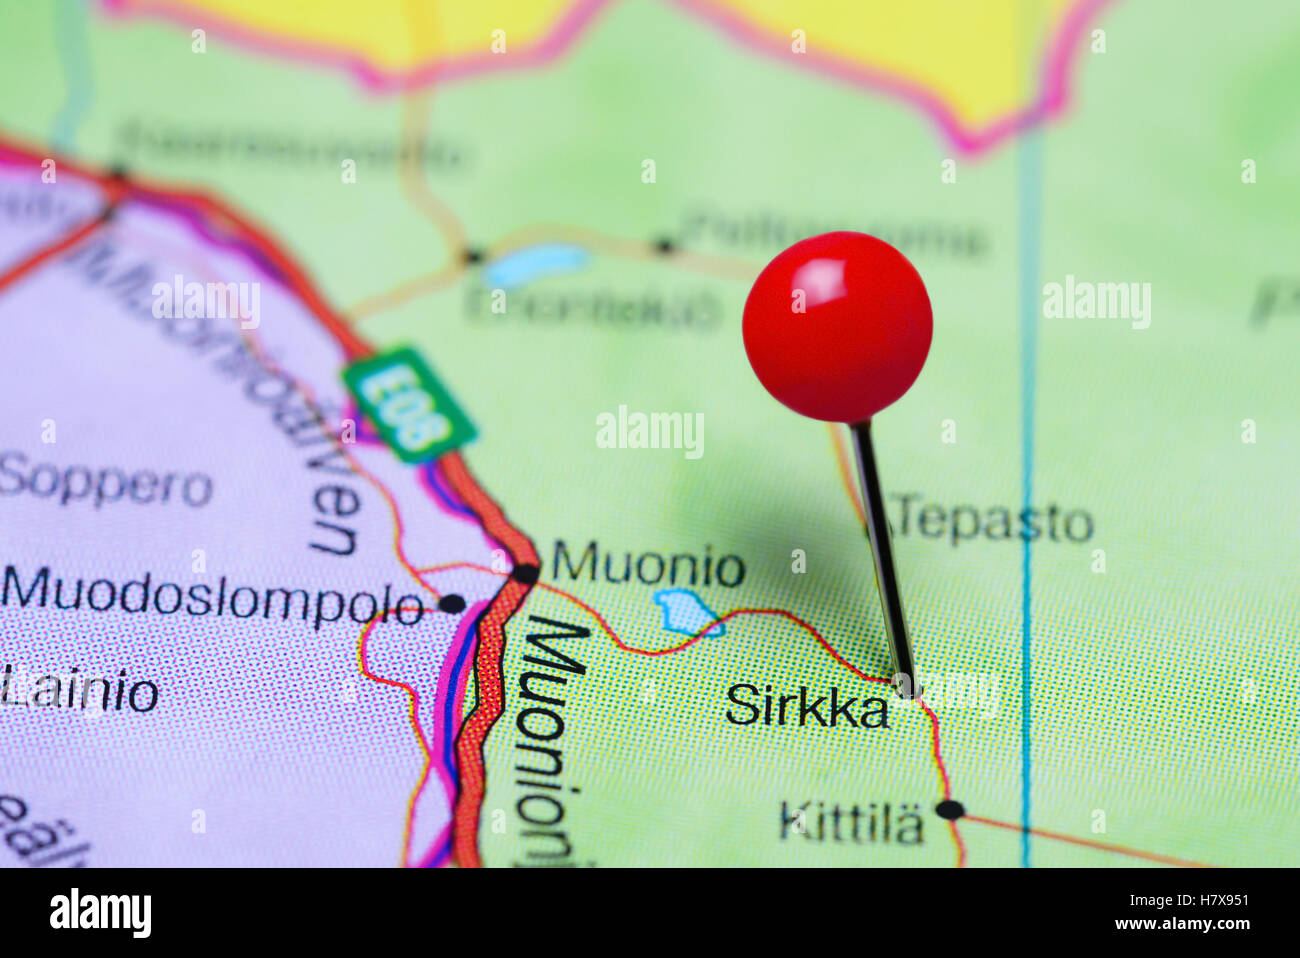 Sirkka pinned on a map of Finland Stock Photo